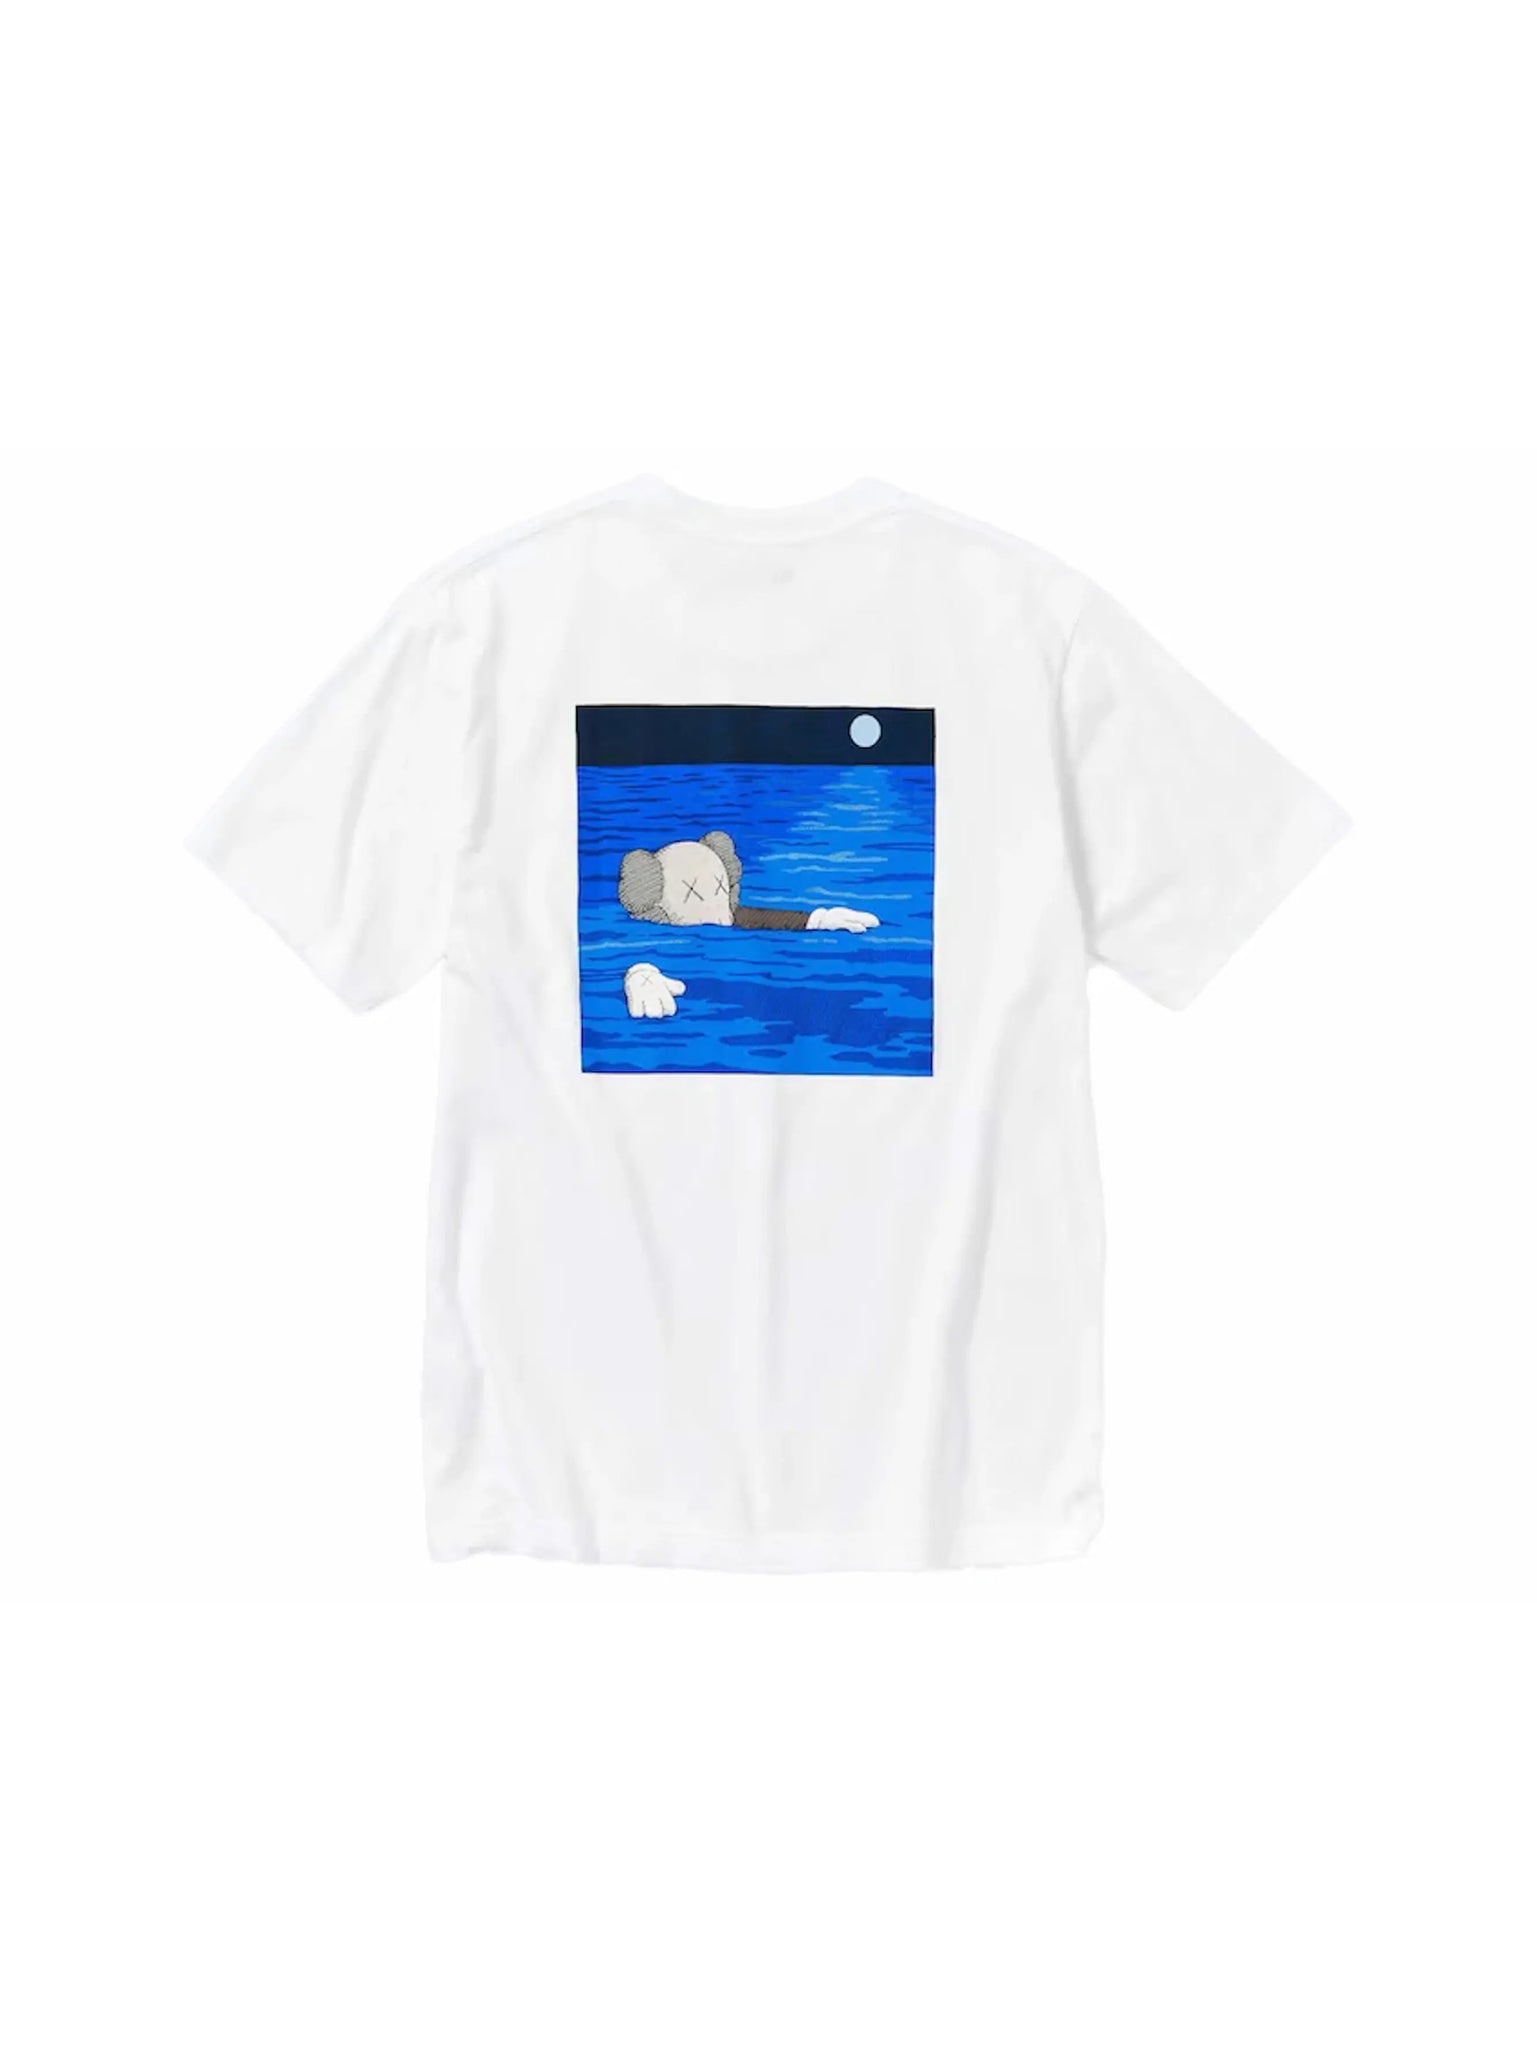 KAWS x Uniqlo UT Short Sleeve Artbook Cover T-shirt (US Sizing) White in Melbourne, Australia - Prior